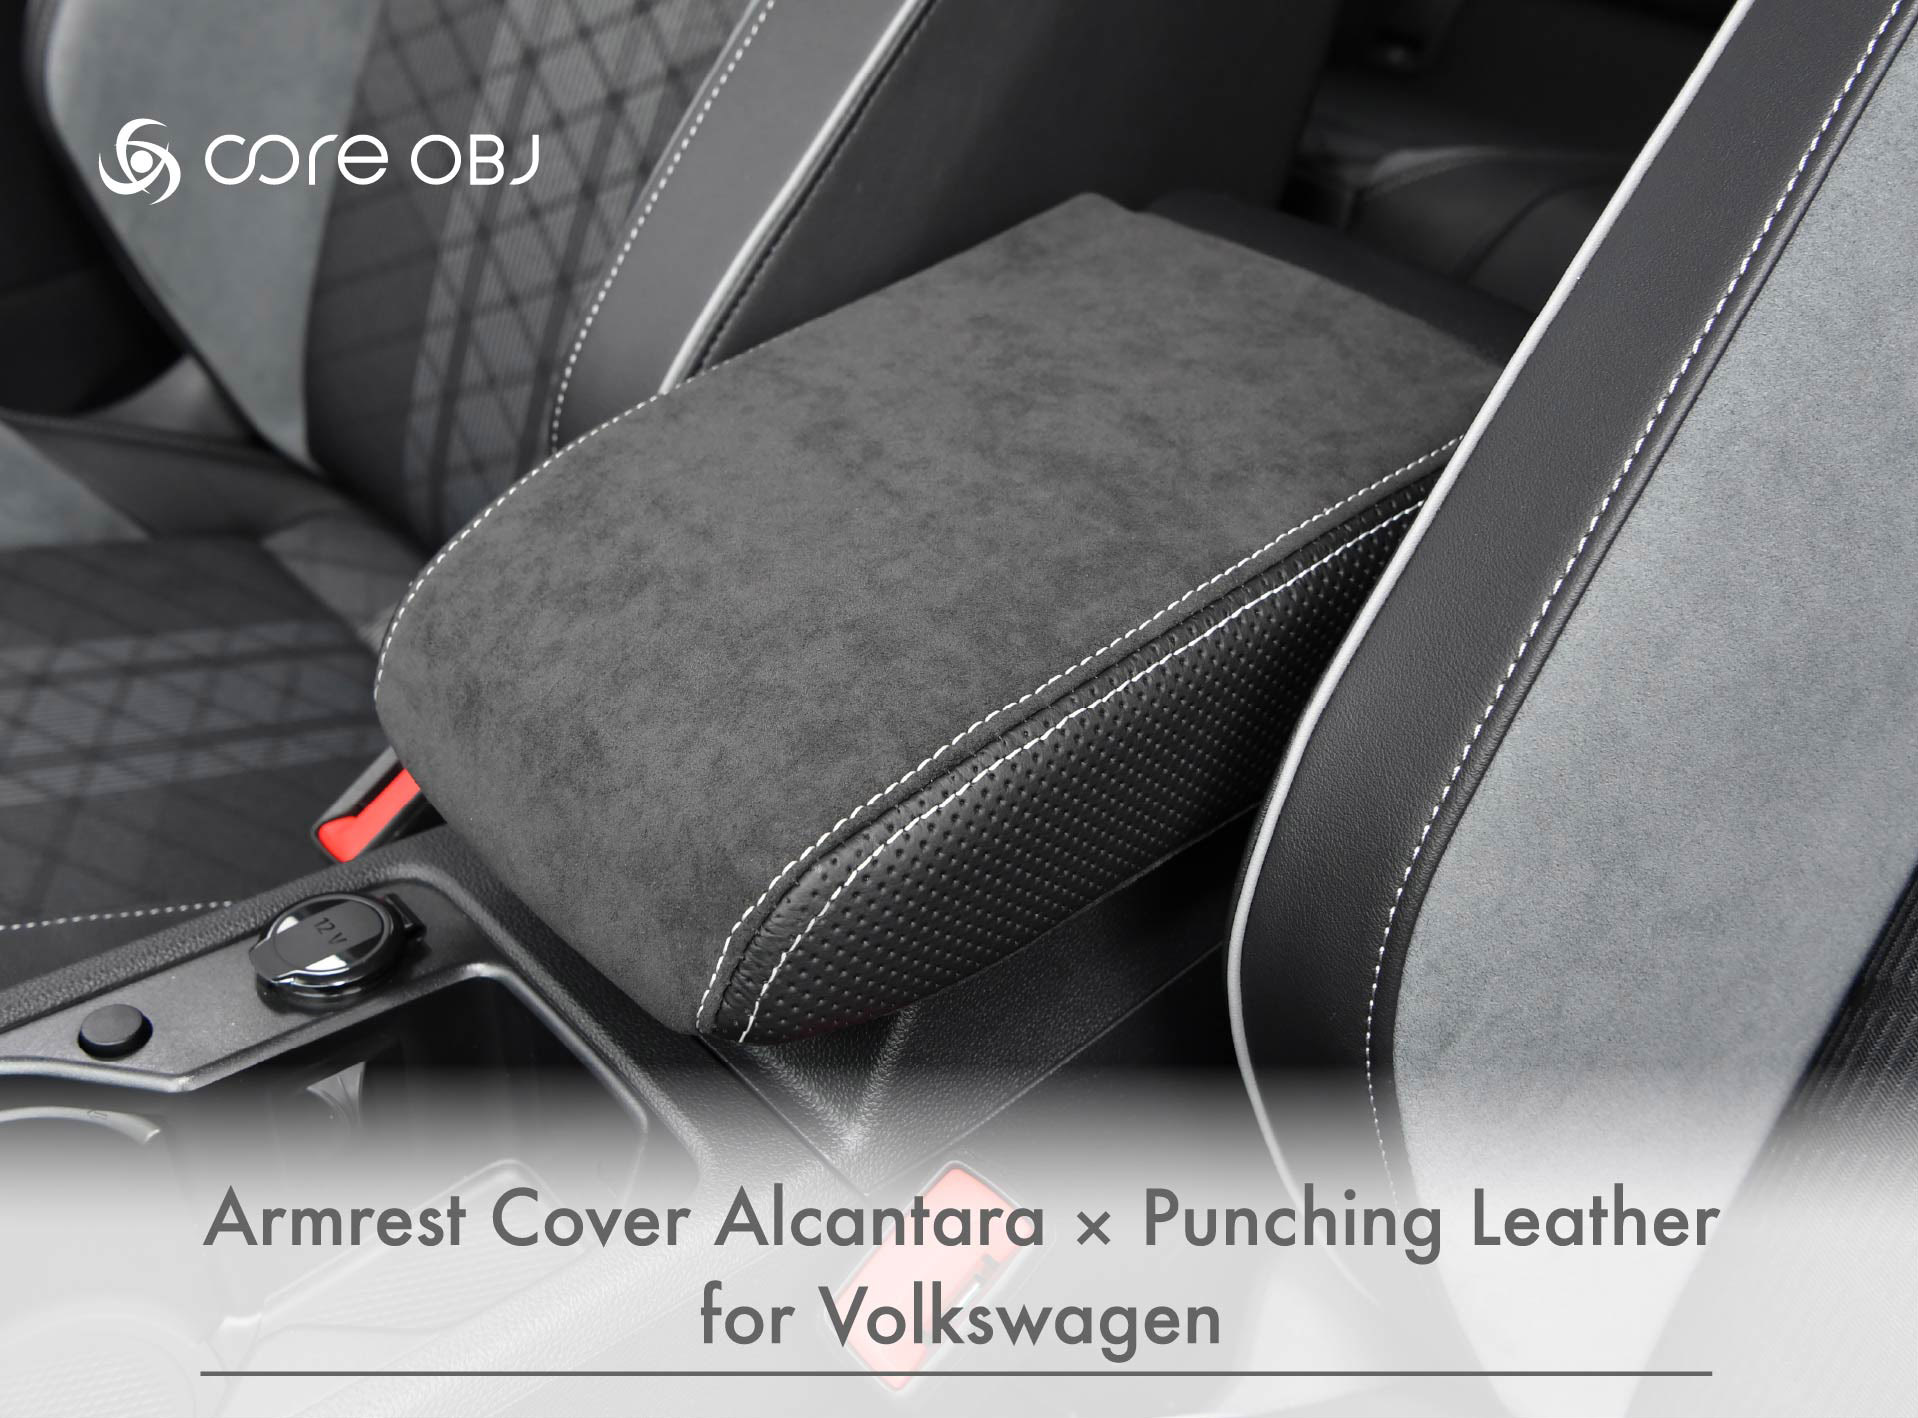 Armrest Cover Alcantara × Punching Leather for Volkswagen / core